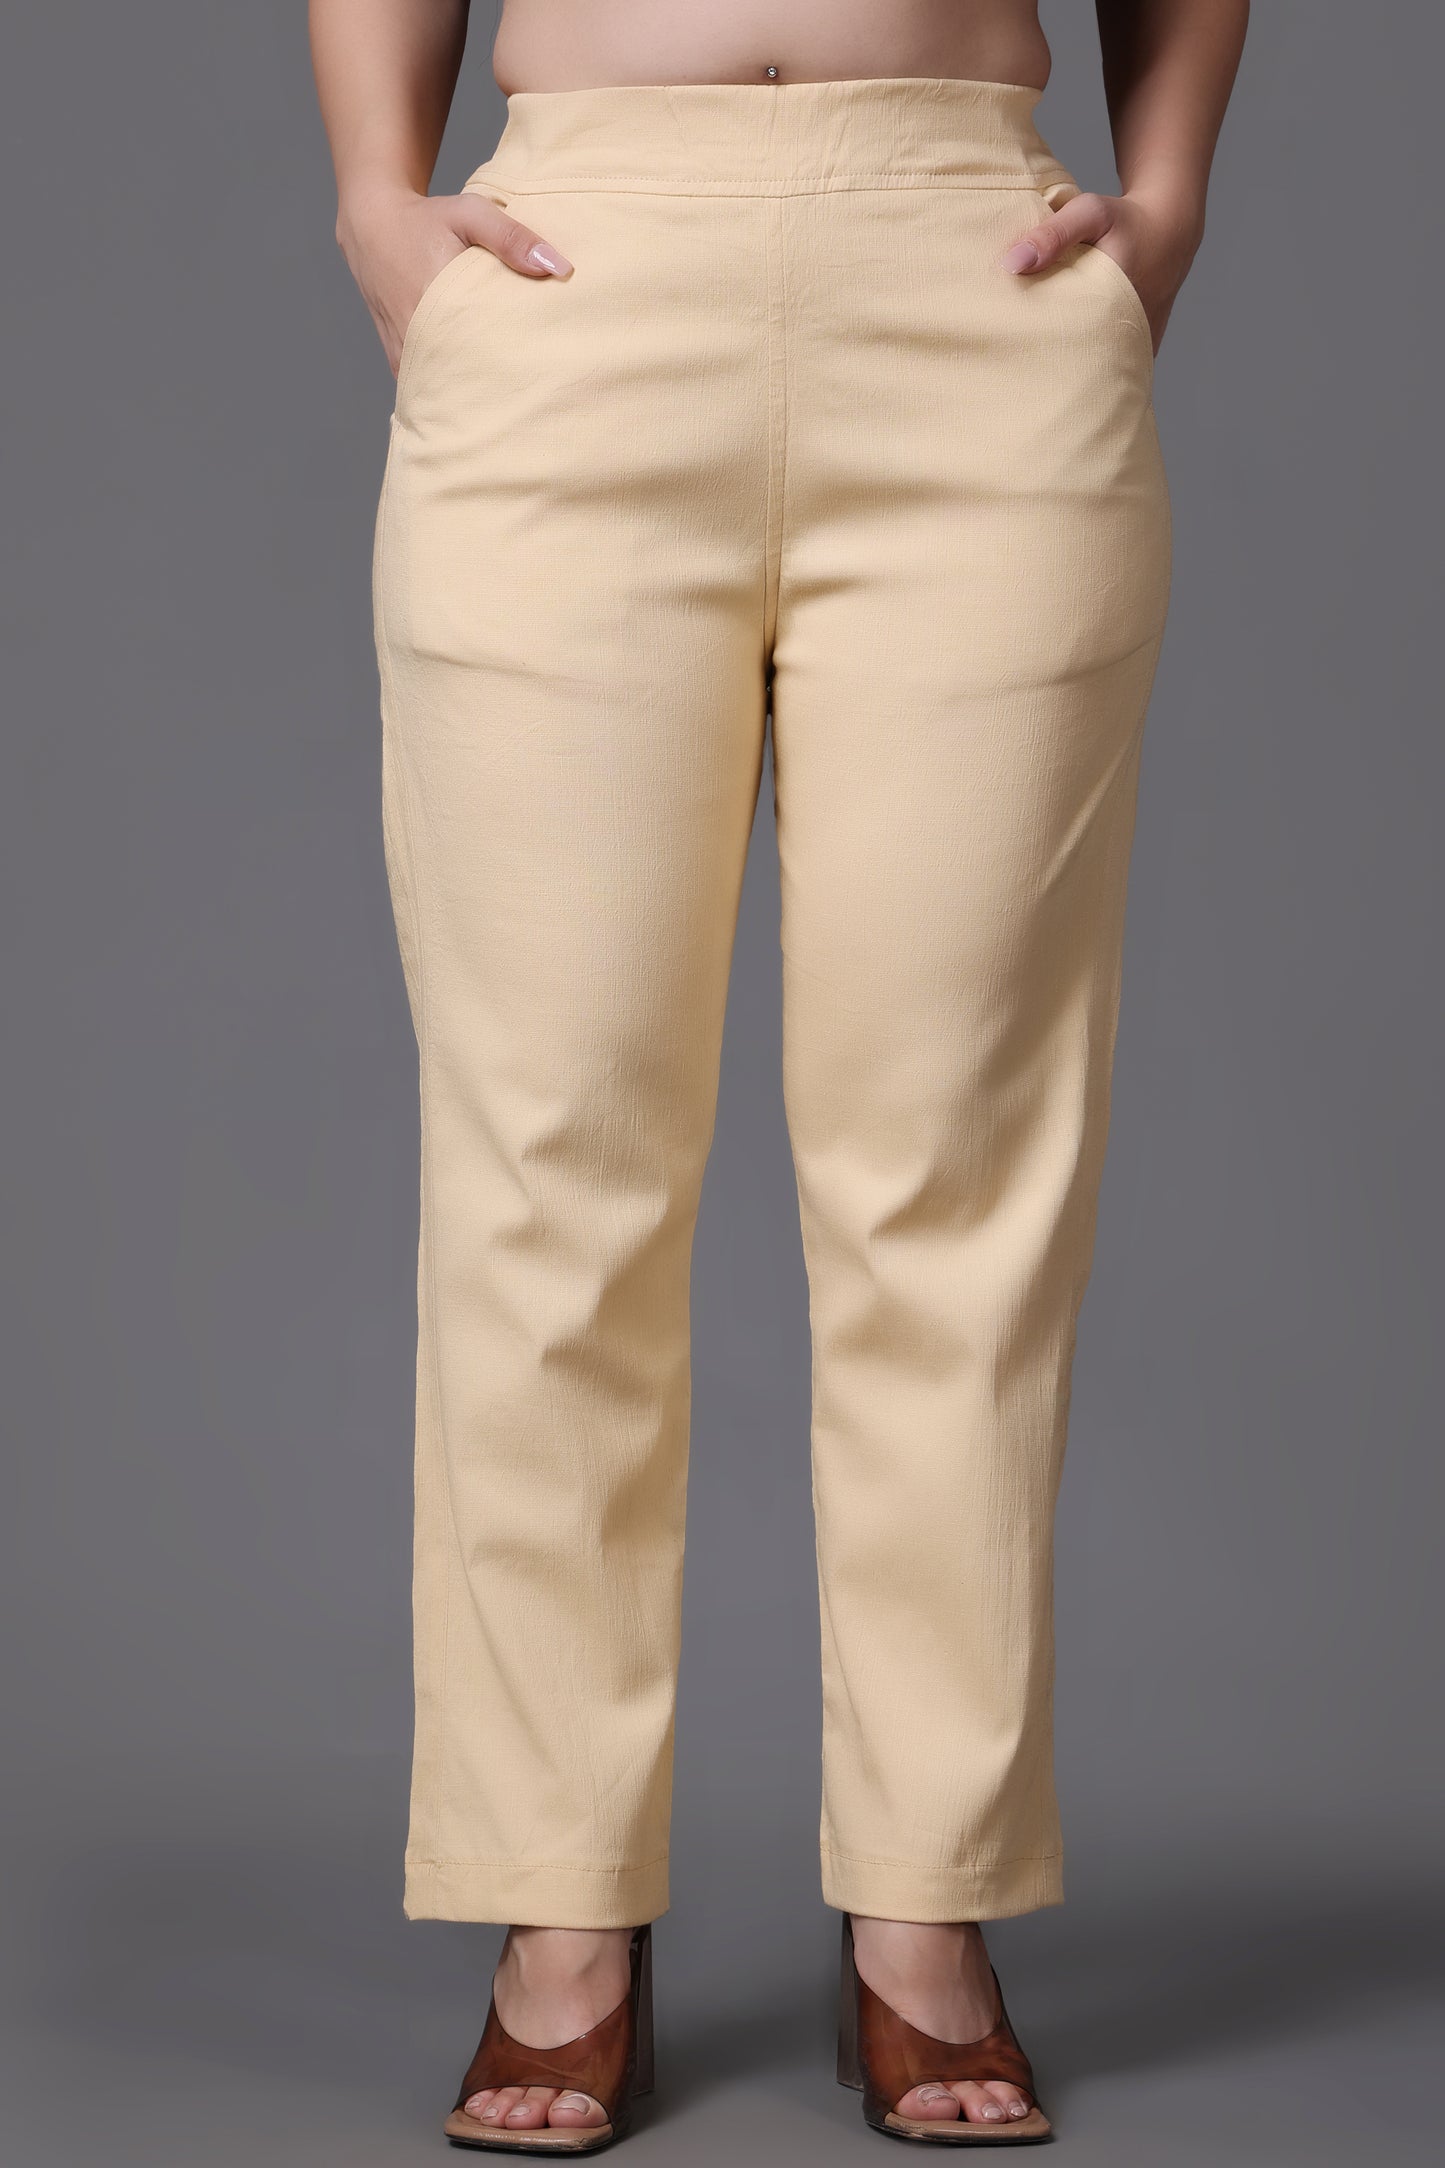 Buy Plus Size Formal Pants & Plus Size Stretchable Pants - Apella